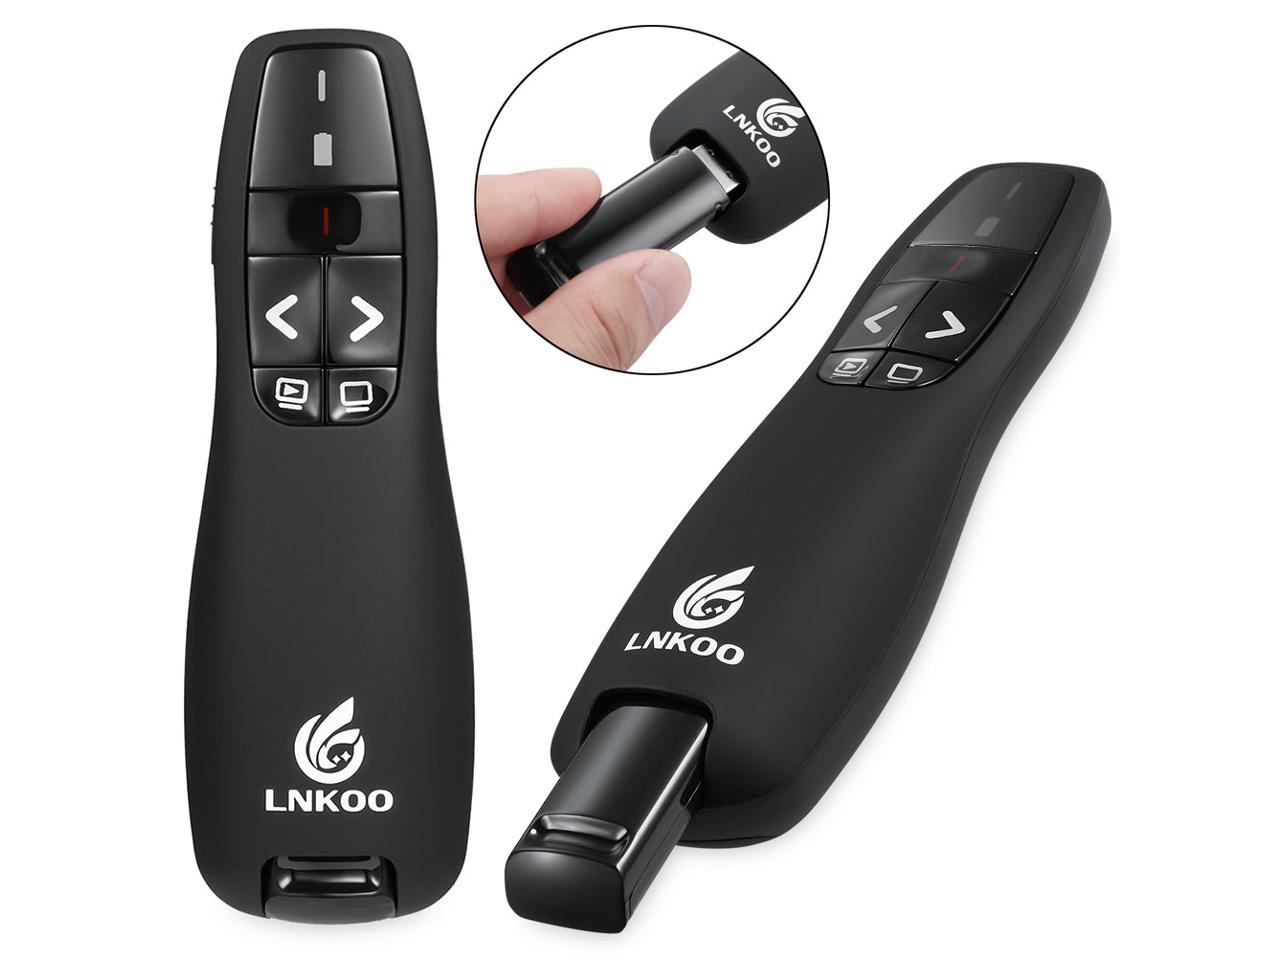 2.4GHz UAB Wireless Remote Control Presentation Mouse Presenter PPT Clicke HI 